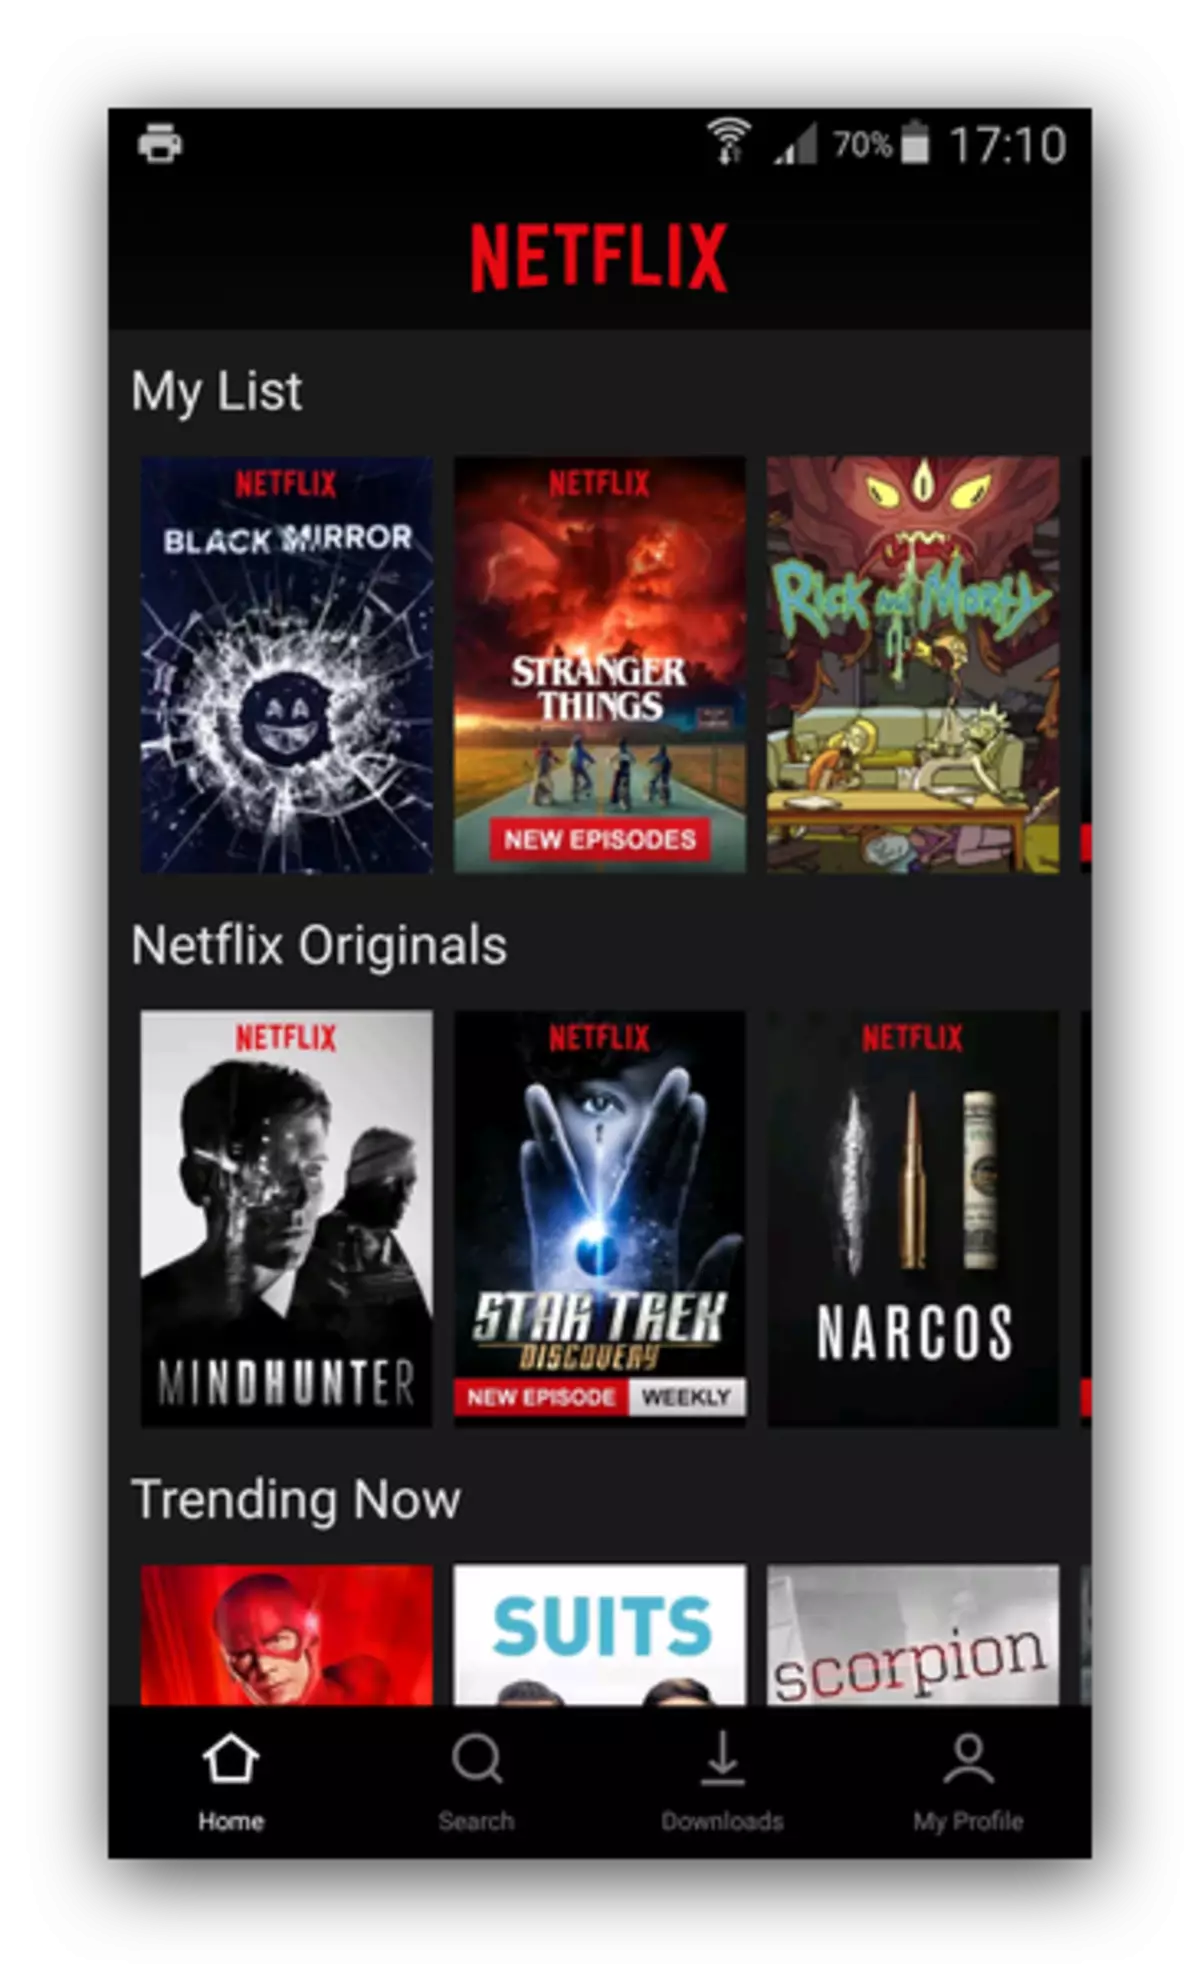 Netflix-д CIS кино, телевизийн цувралд ашиглах боломжтой